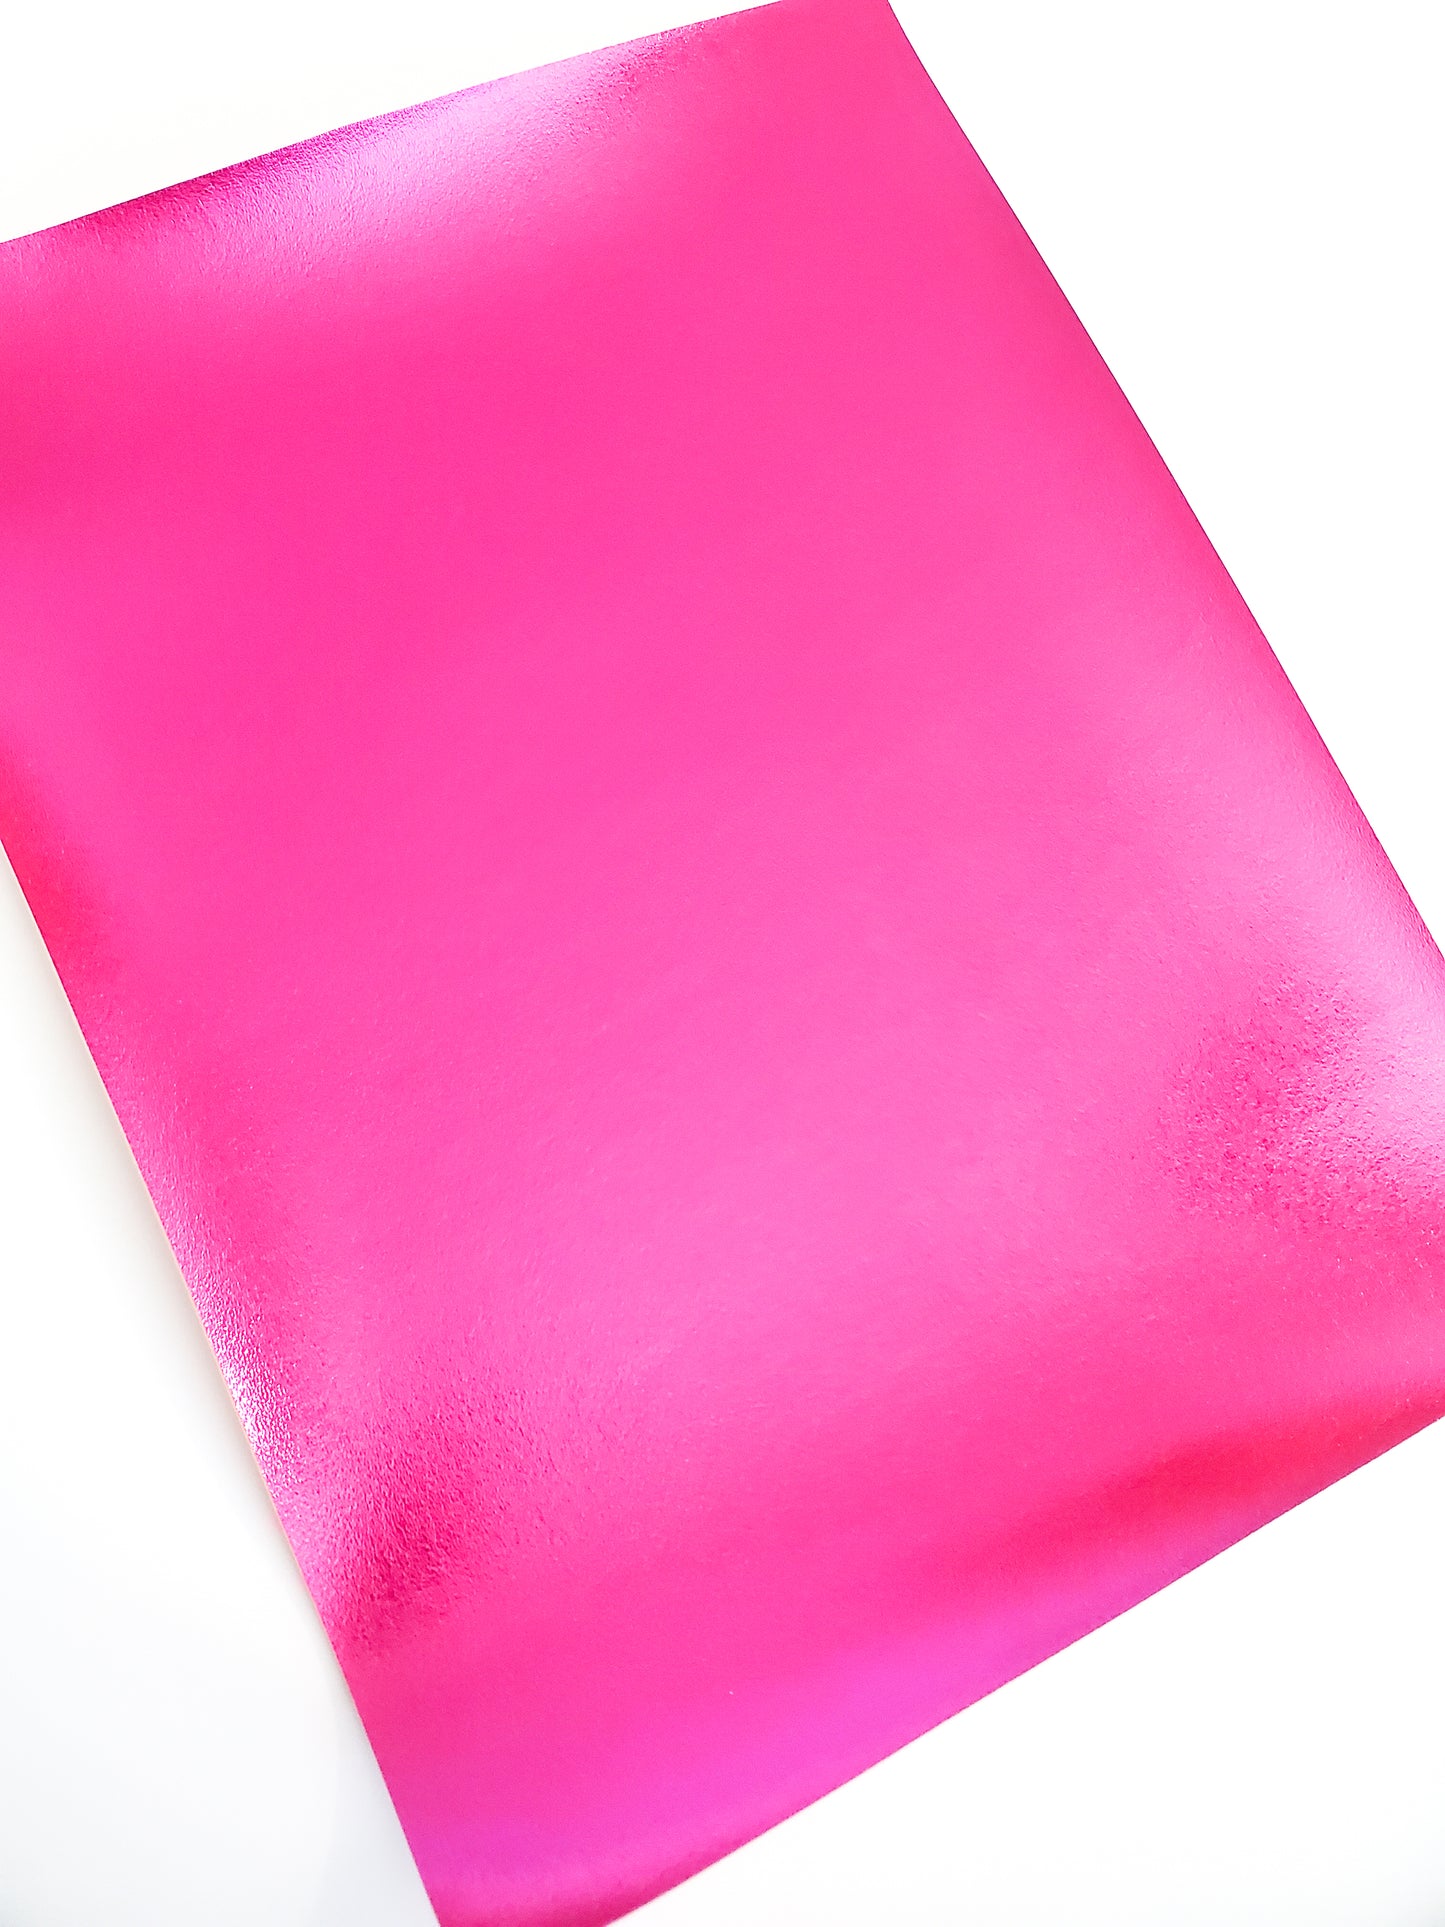 Metallic Hot Pink Smooth 9x12 faux leather sheet